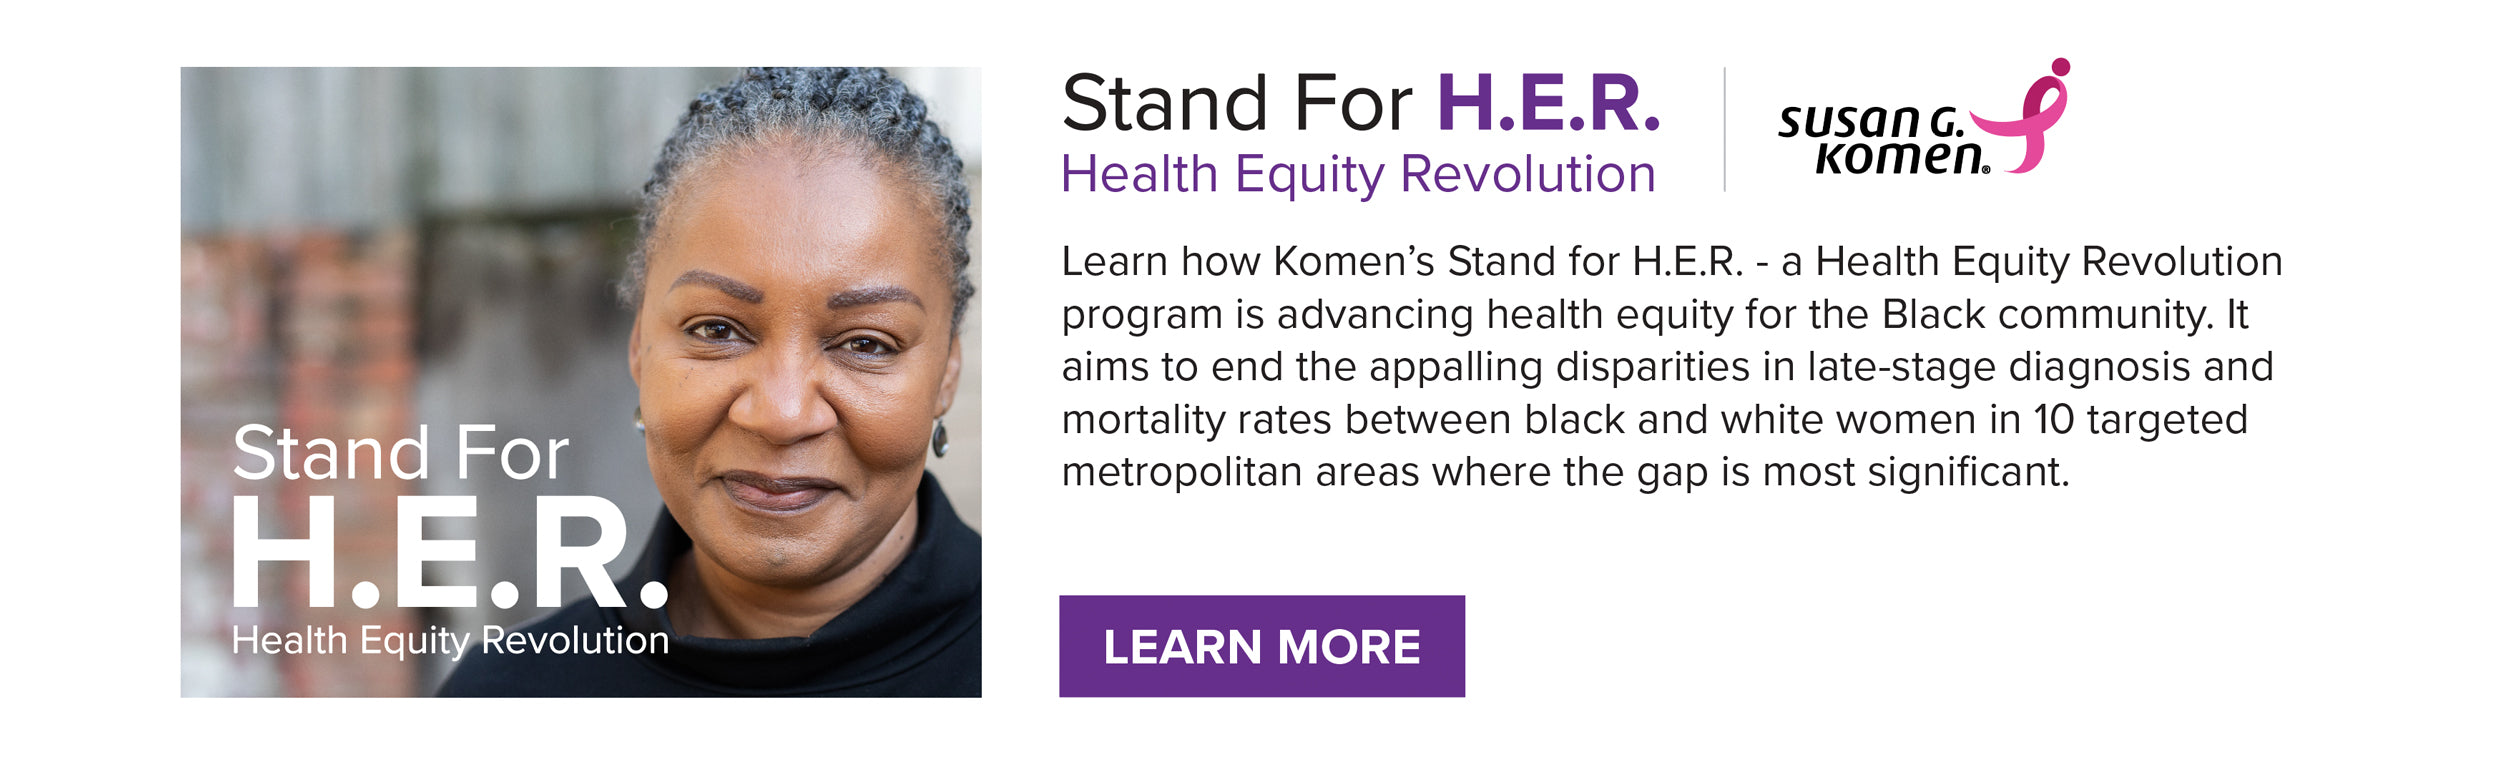 Stand For H.E.R. - Health Equity Revolution